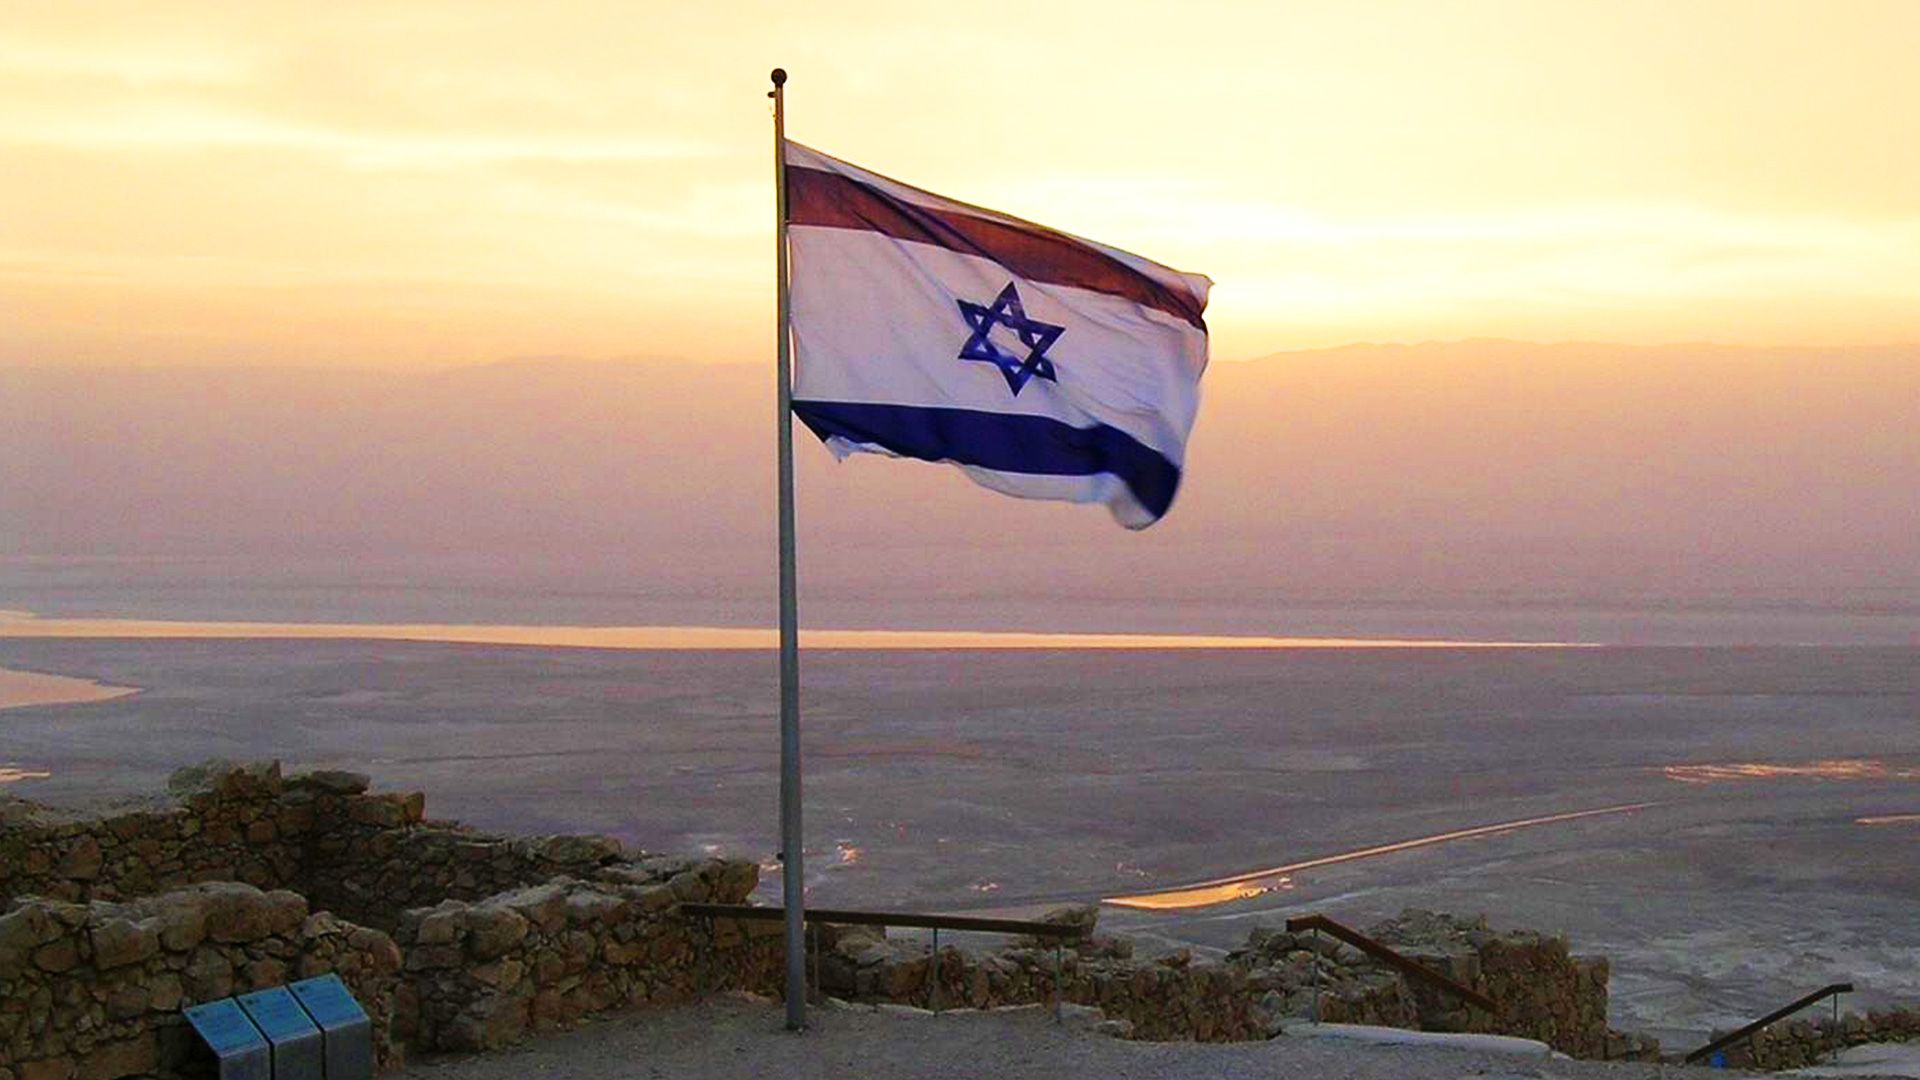 Promotional image for Новая война в Израиле